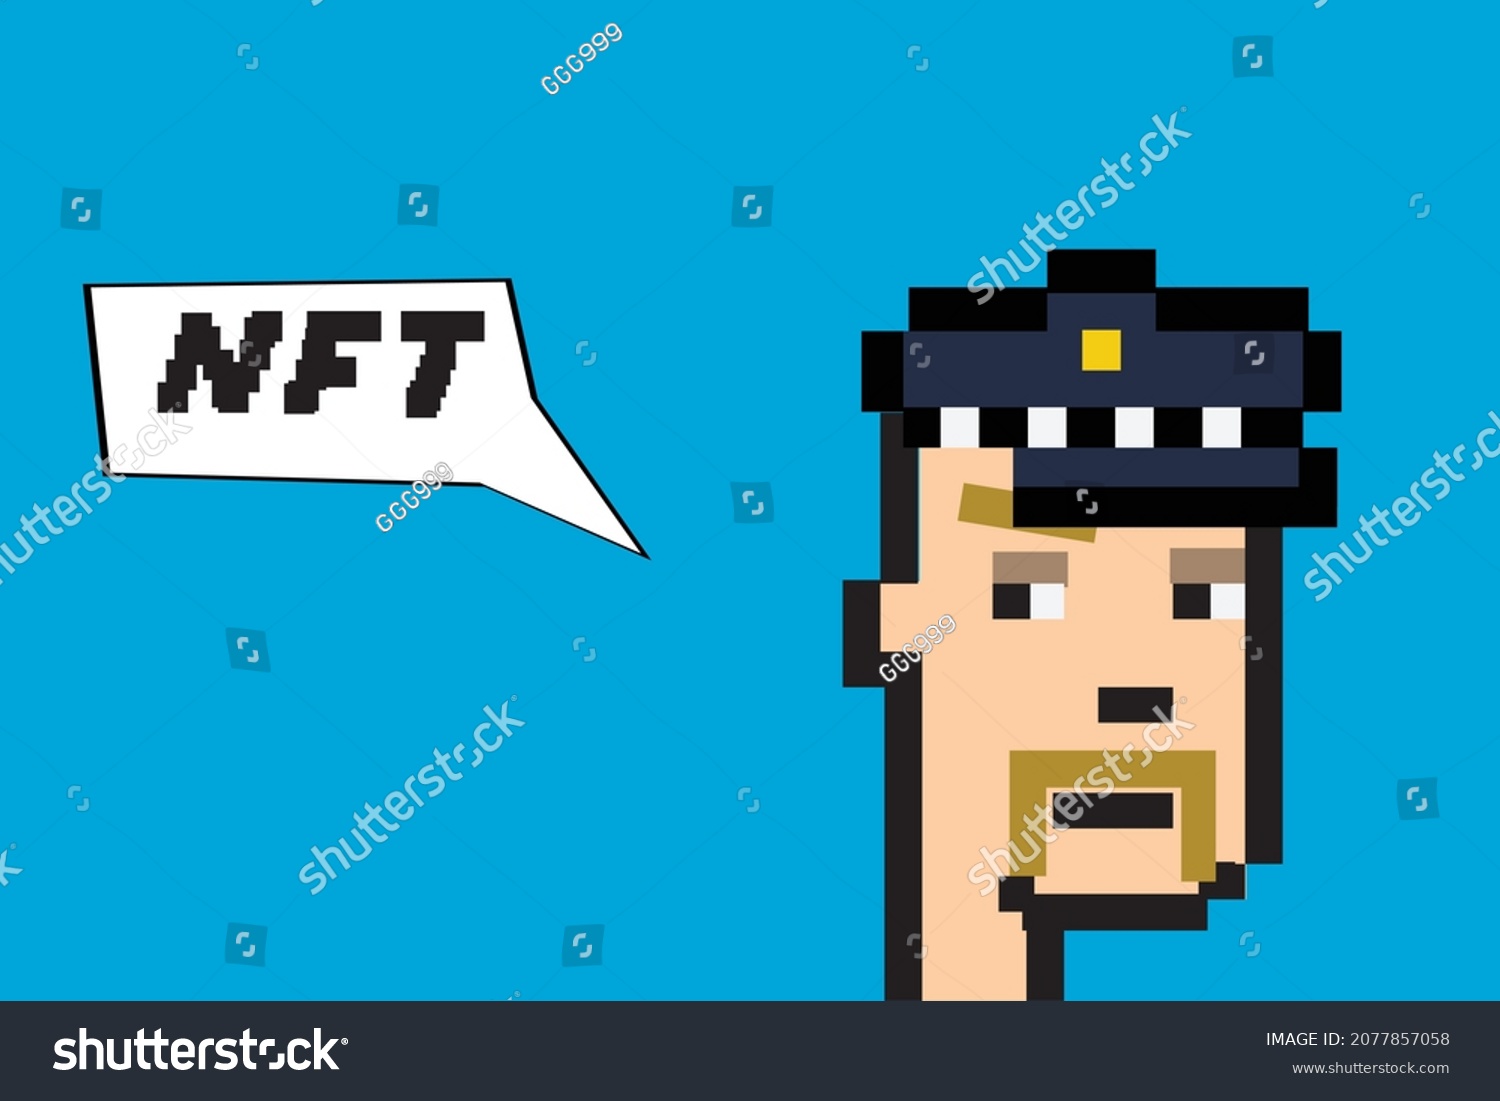 SVG of Cryptopunk NFT blockchain, non fungible token. Pixel art character. policeman svg